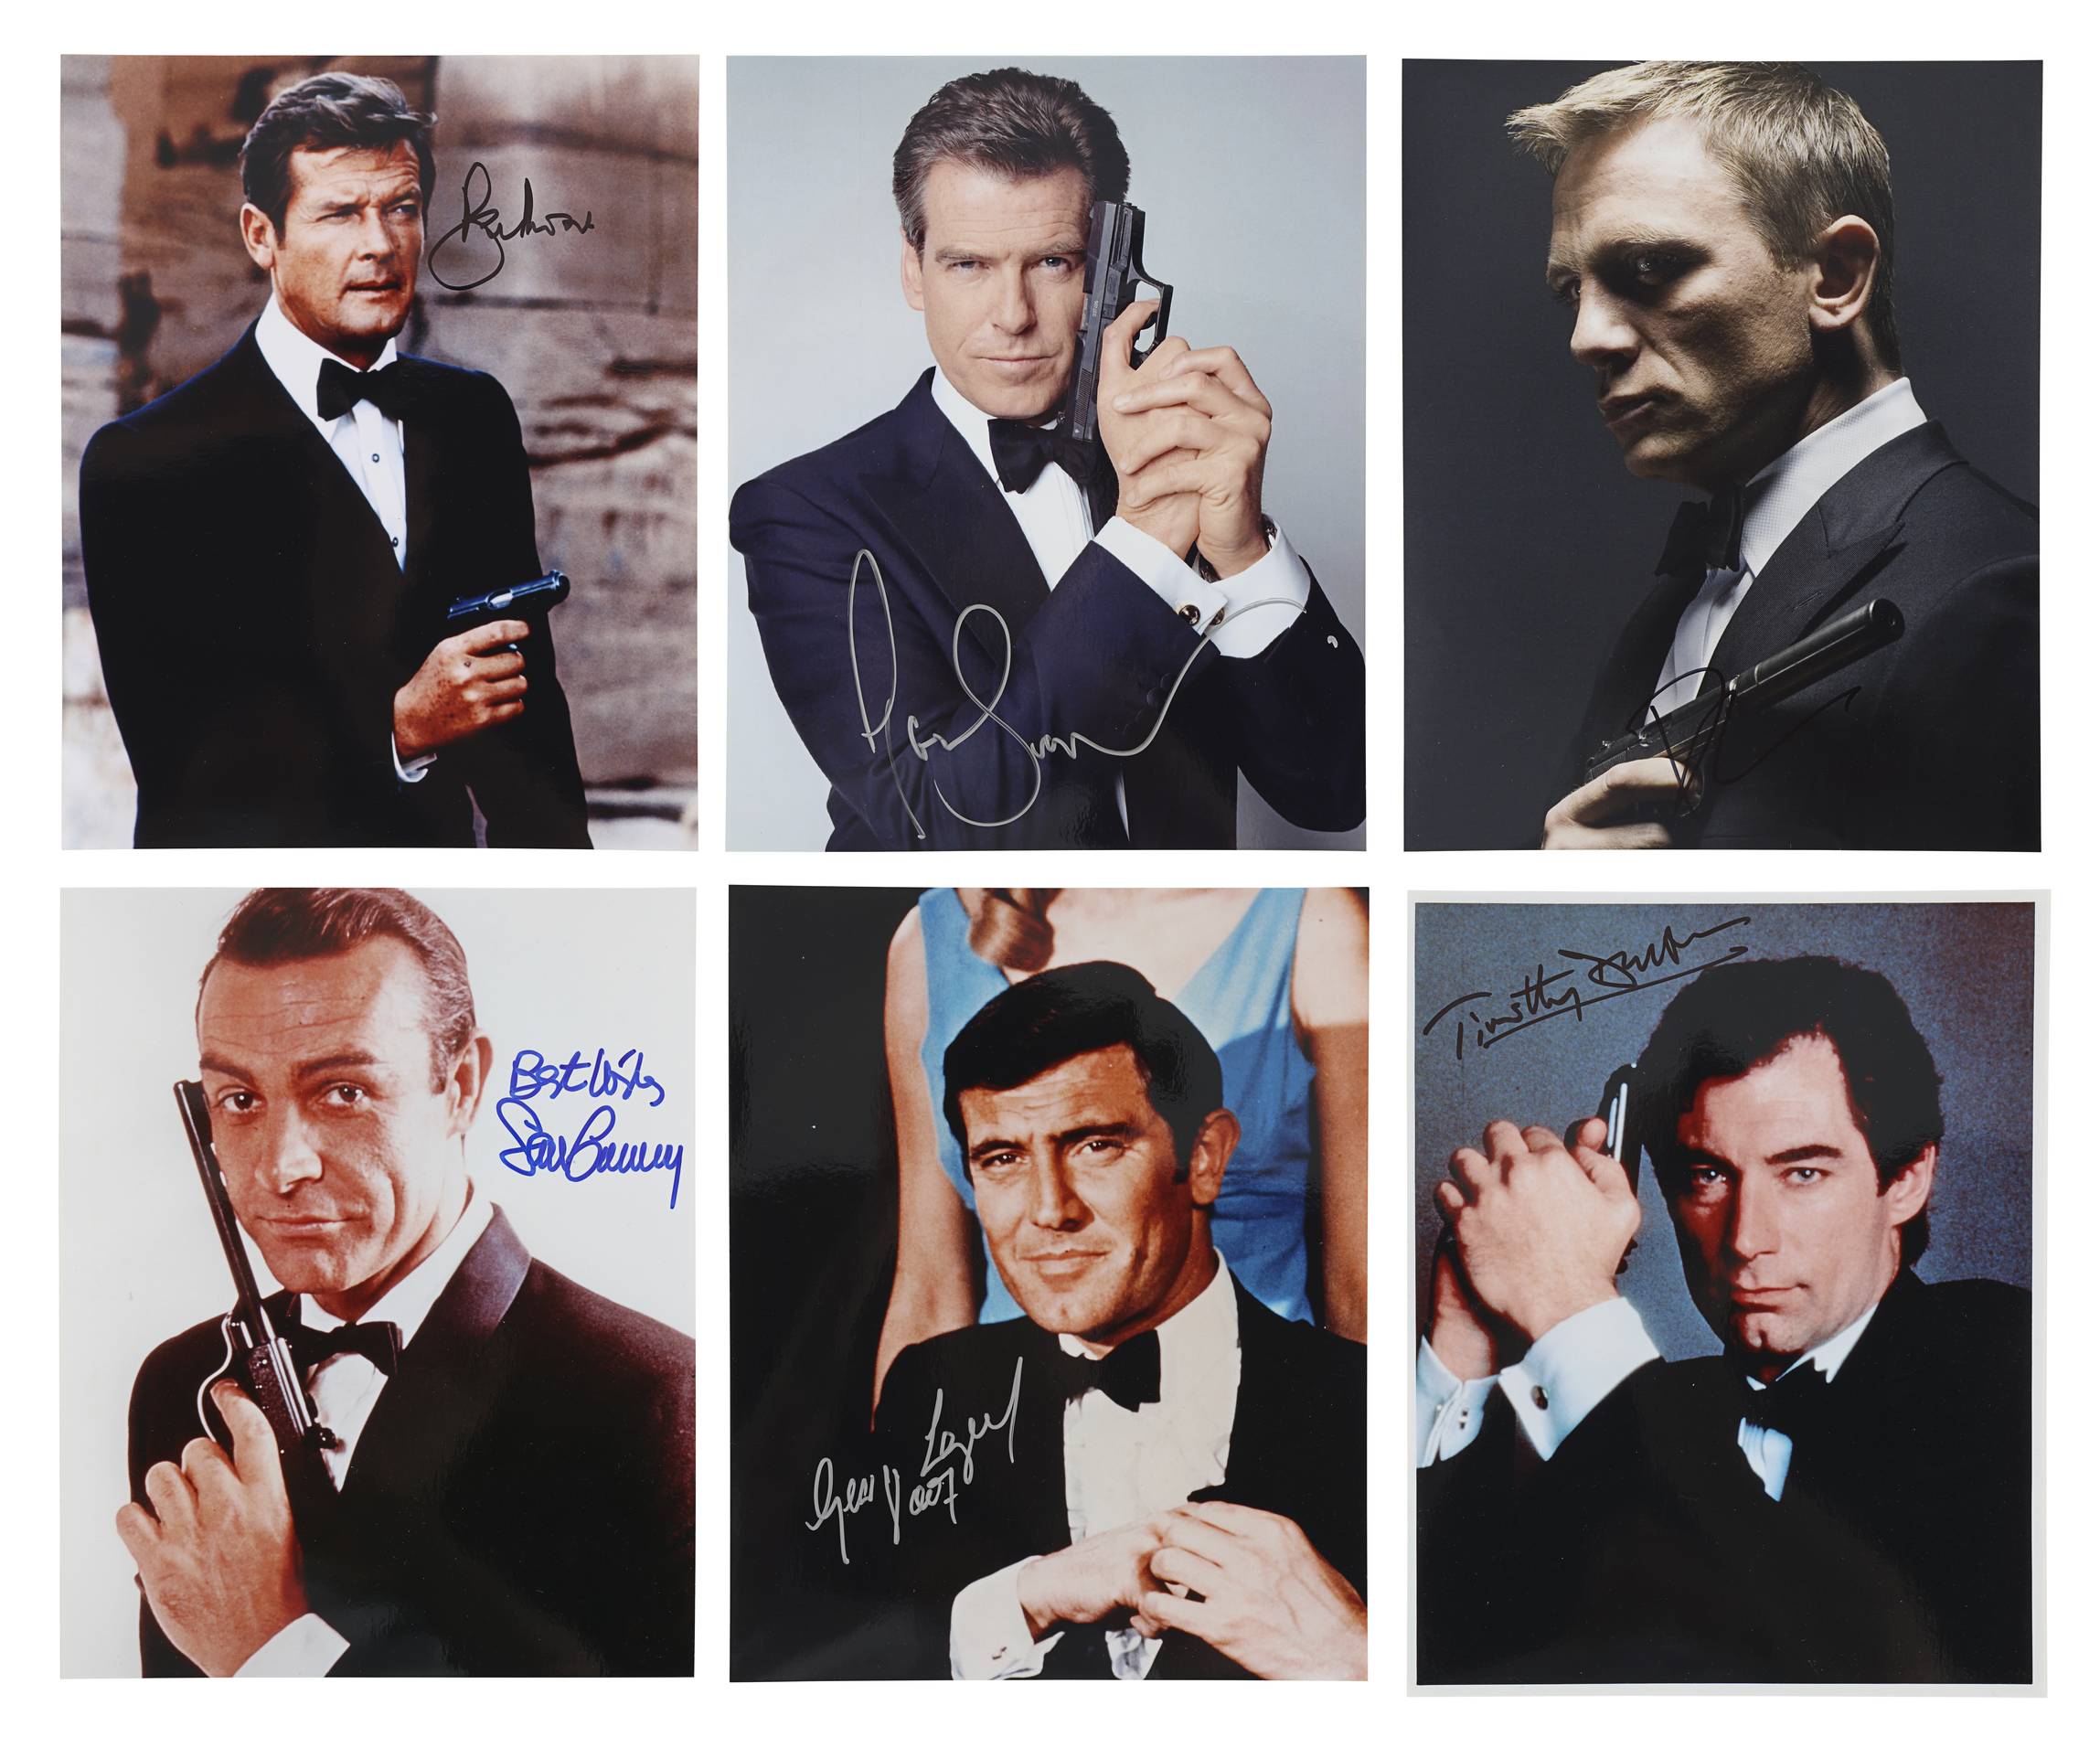 Autographed portraits of James Bond actors through the decades